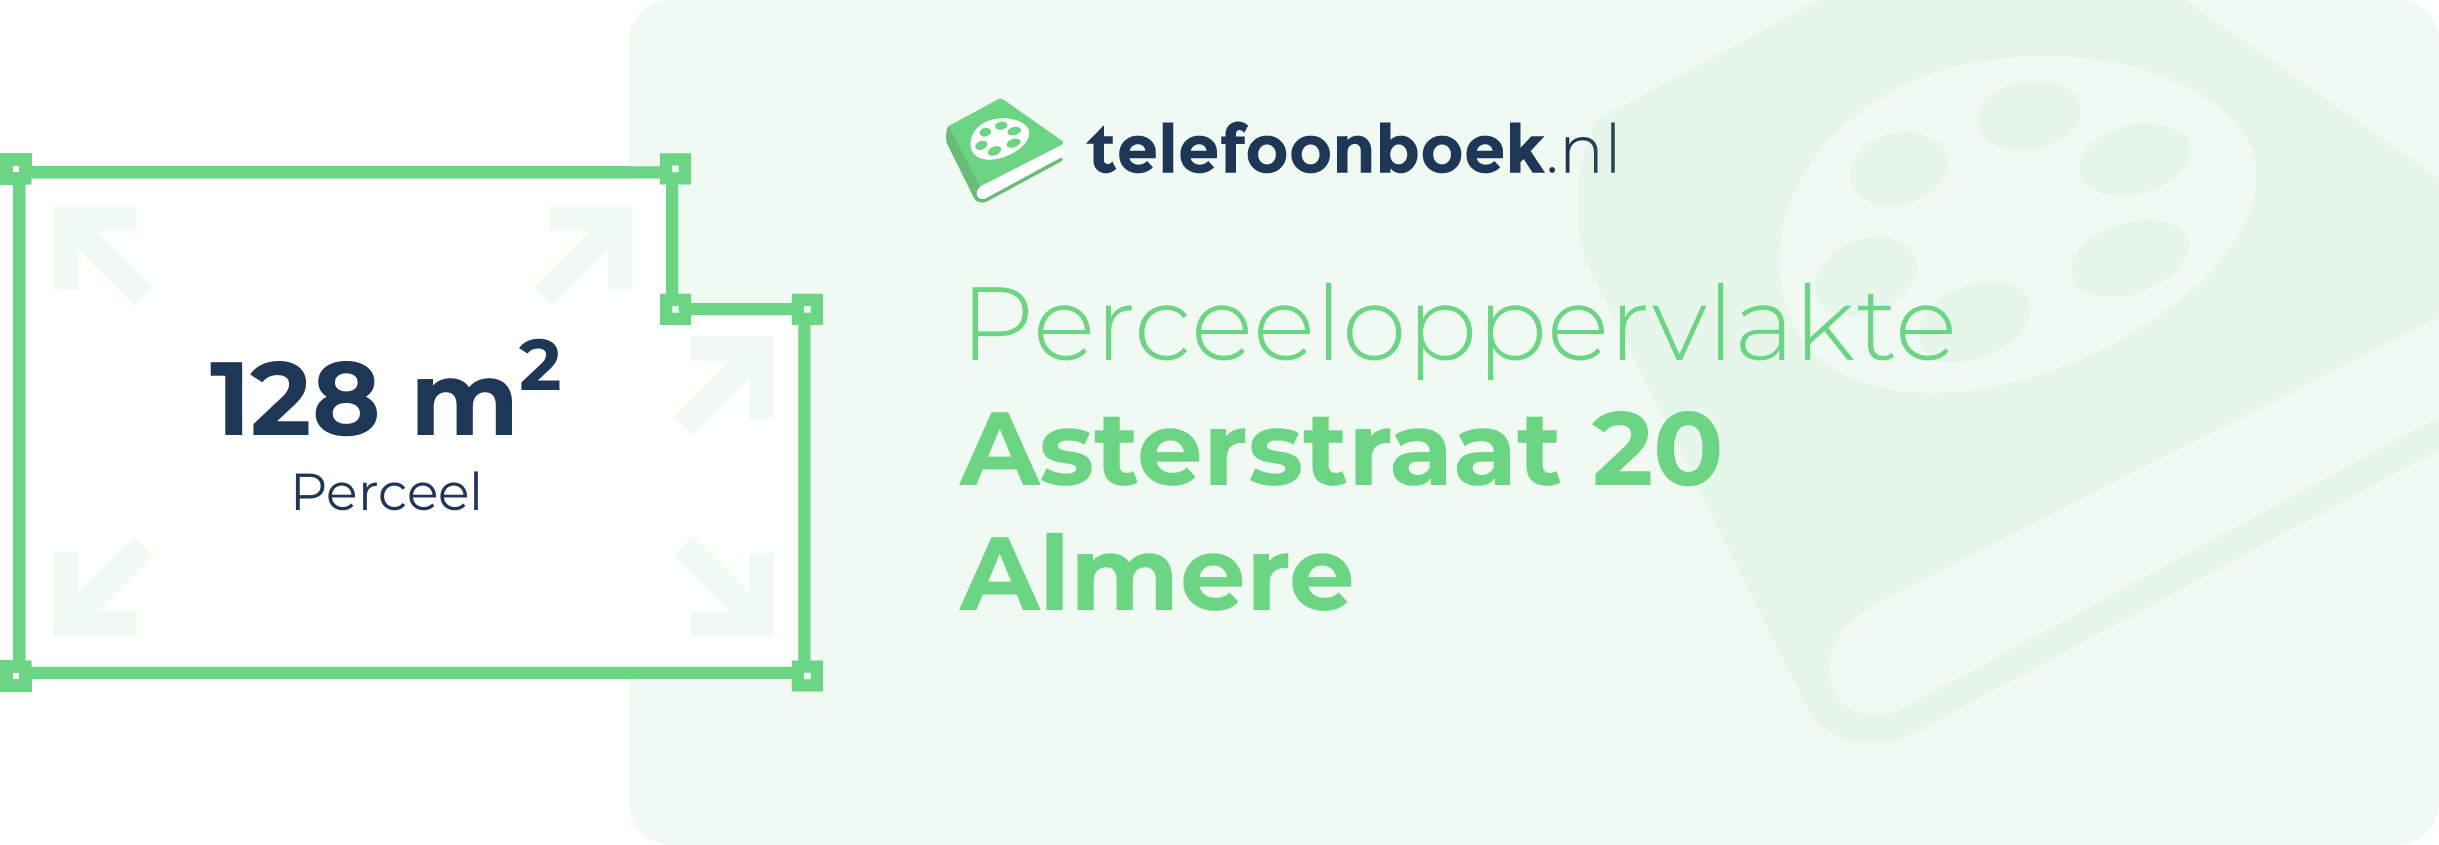 Perceeloppervlakte Asterstraat 20 Almere